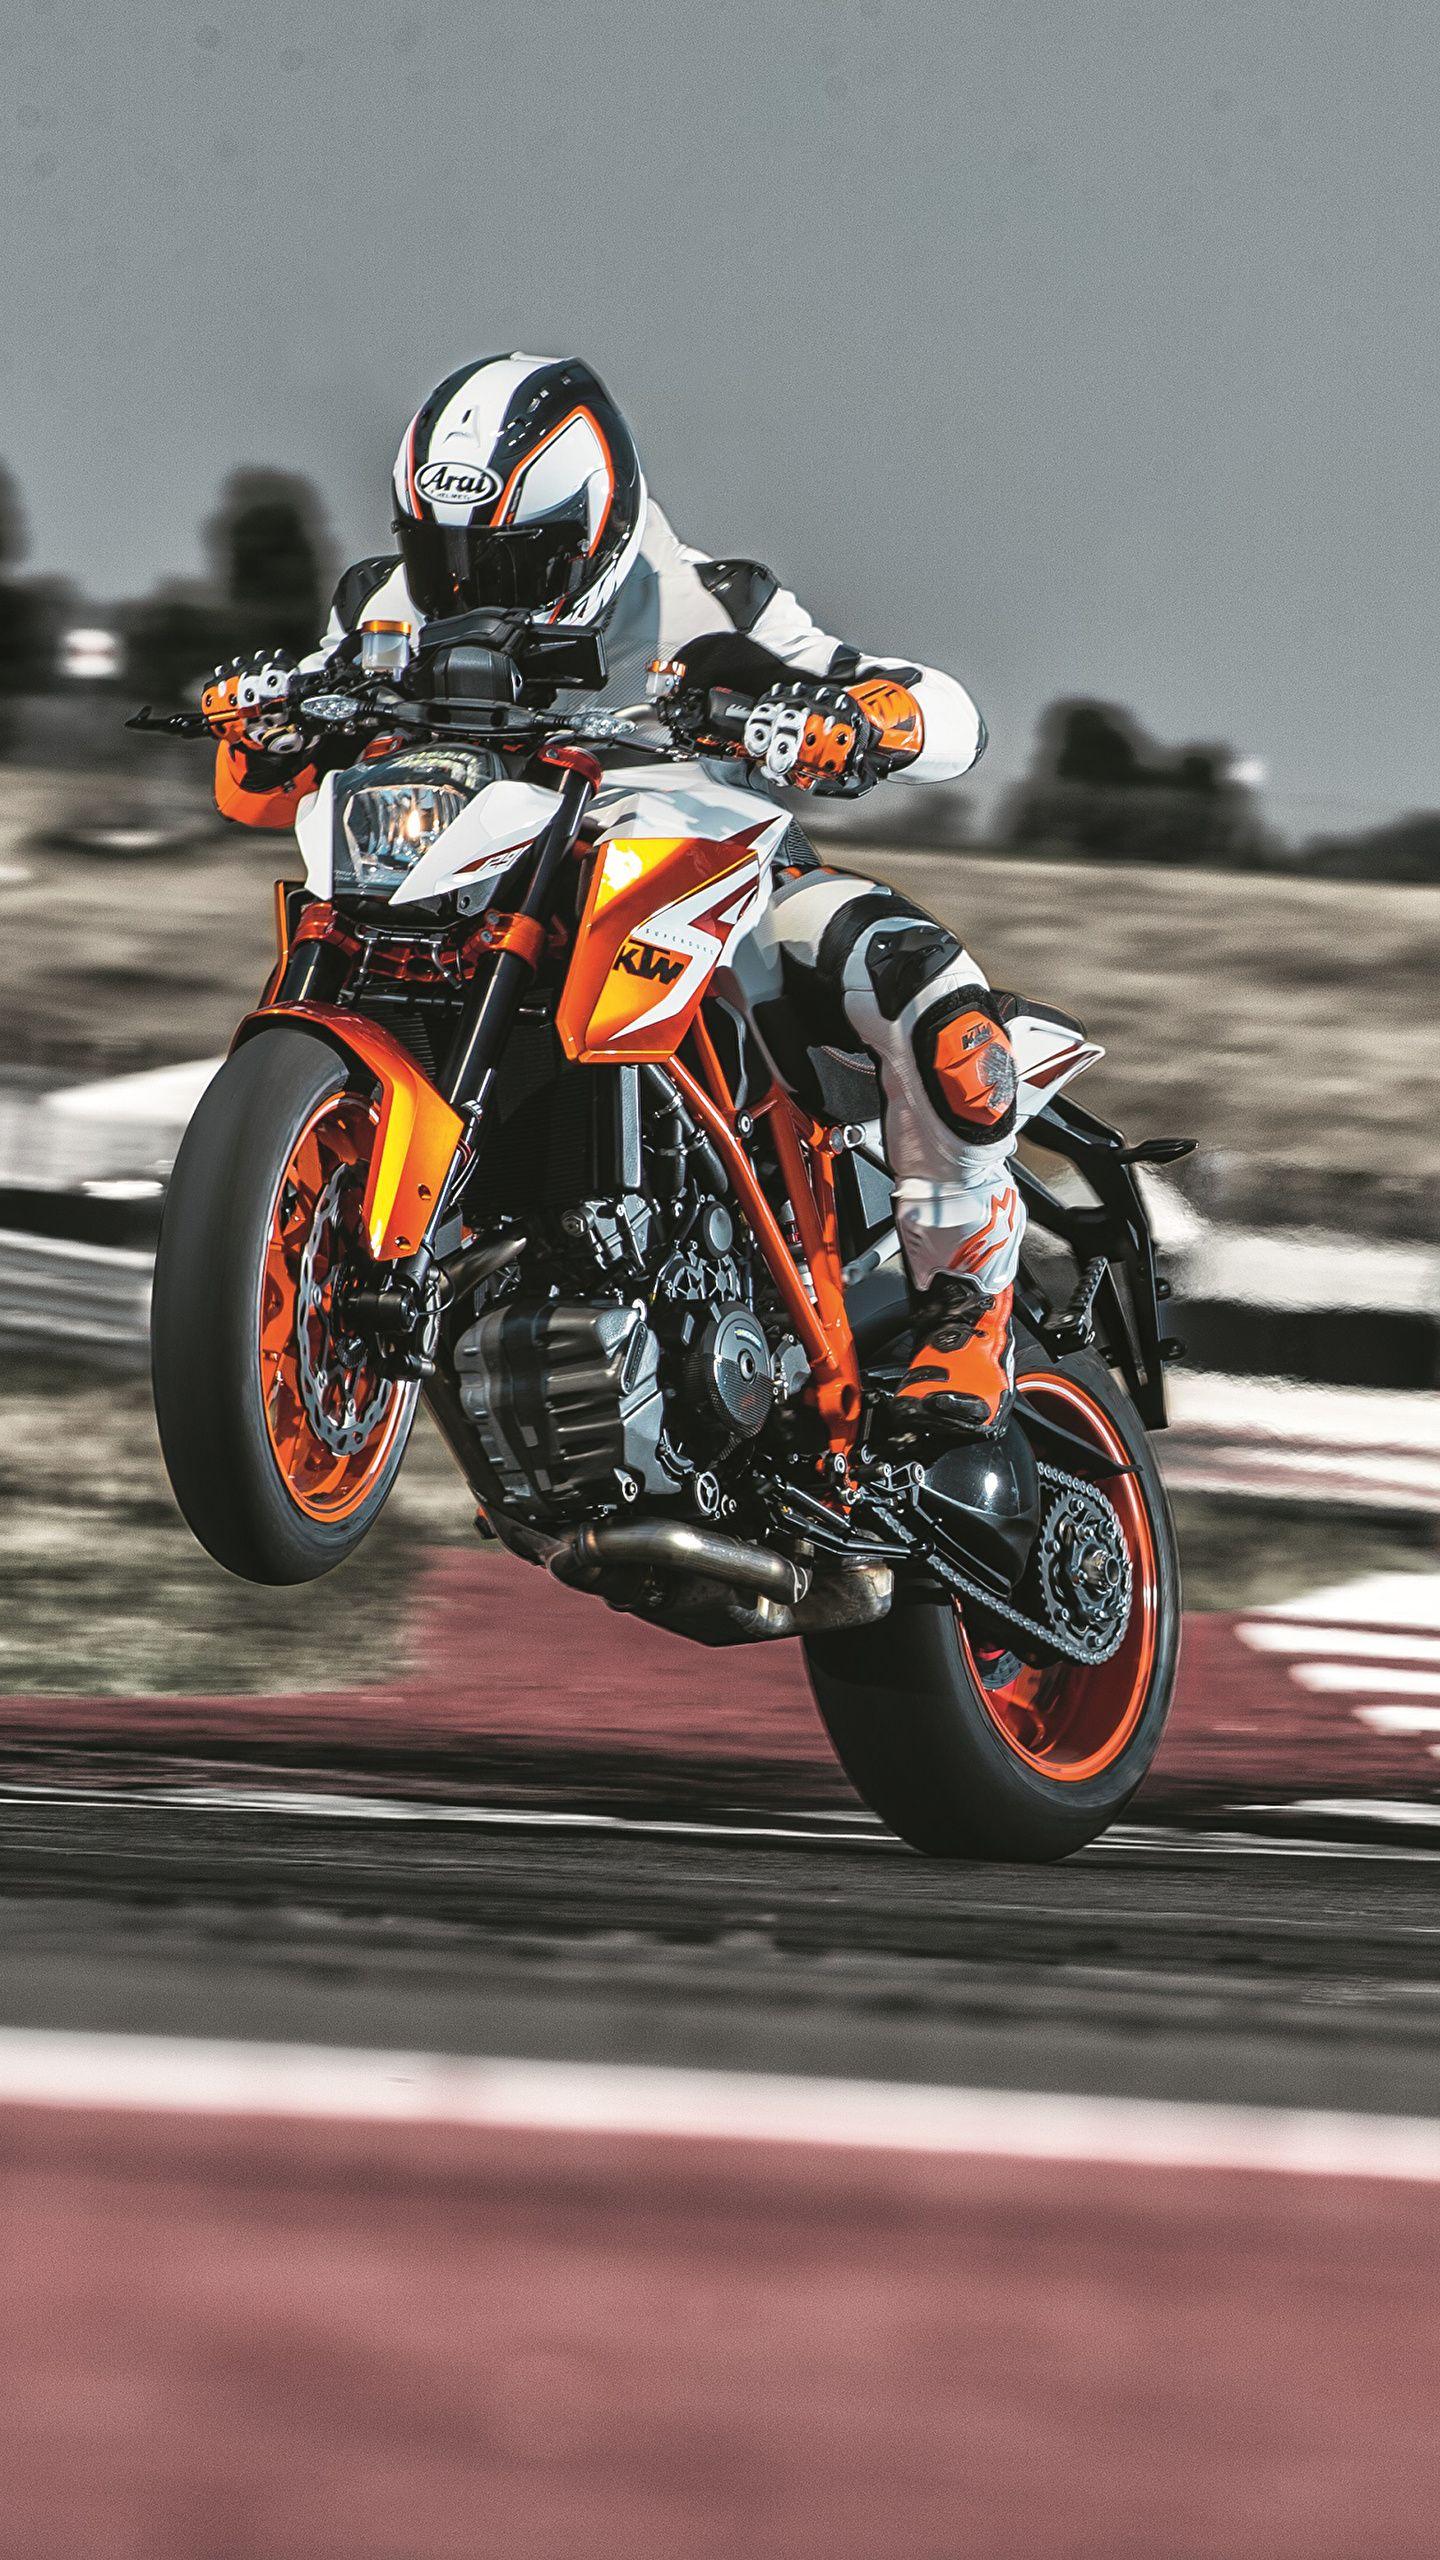 Wallpaper KTM Motorcycles Helmet 2016 1290 Super Duke R 1440x2560